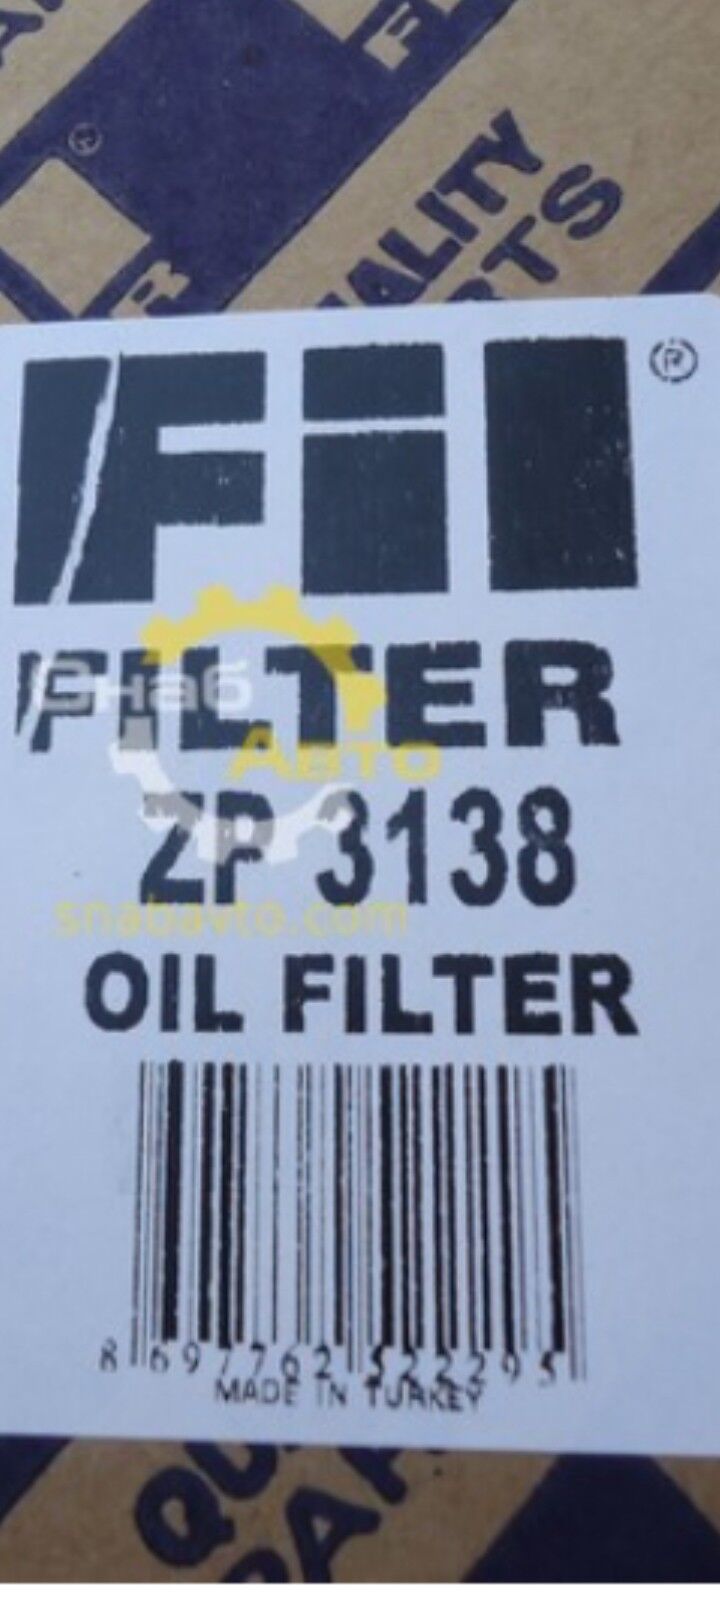 Filter Филтр FIL Zp 3138 250 TMT - Балканабат - img 2